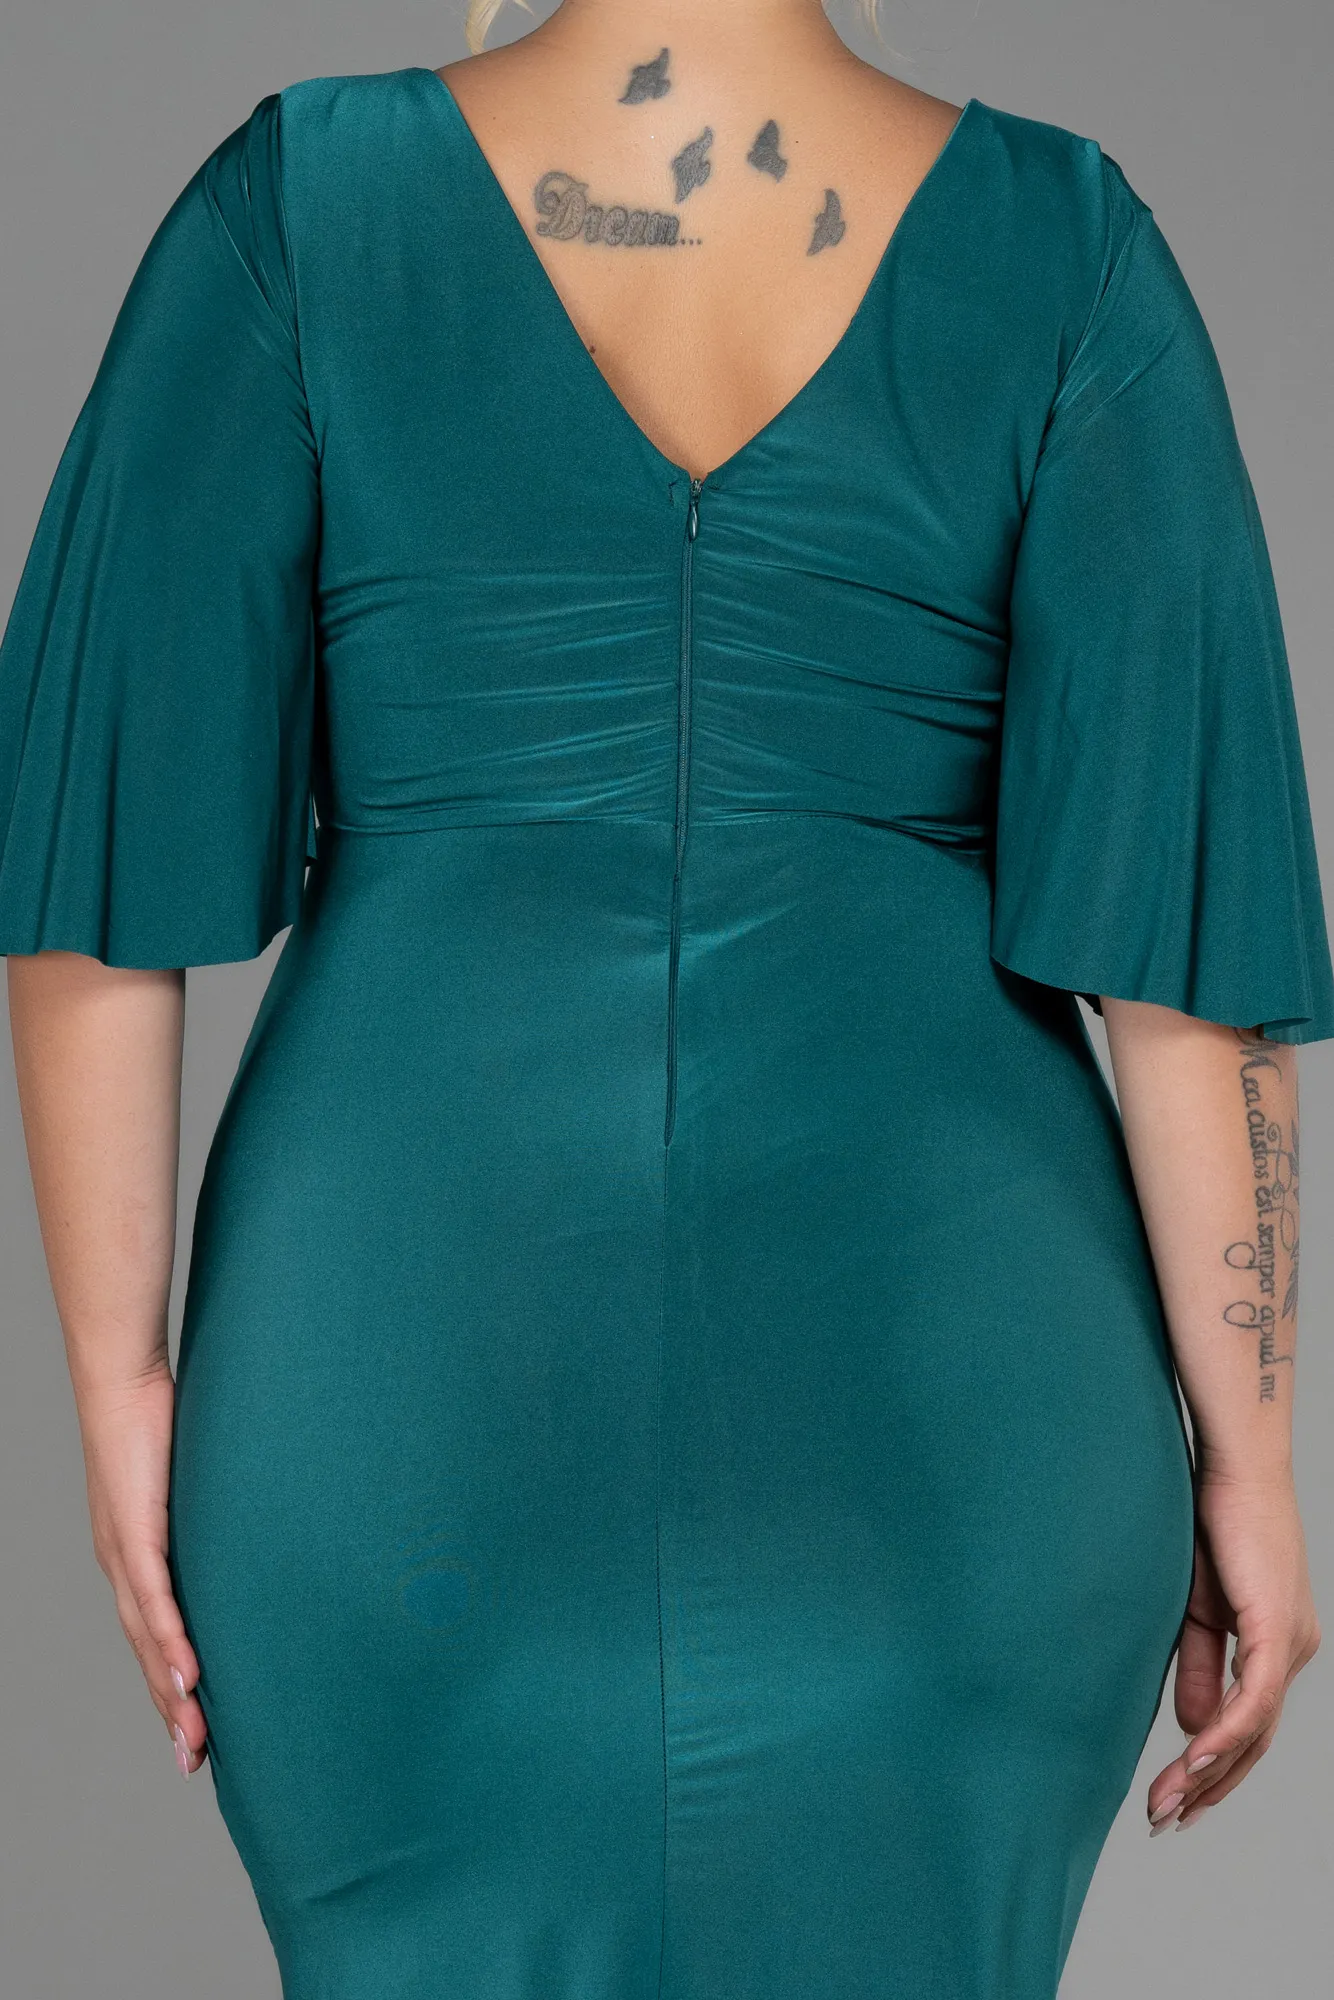 Green-Midi Plus Size Evening Dress ABK1801